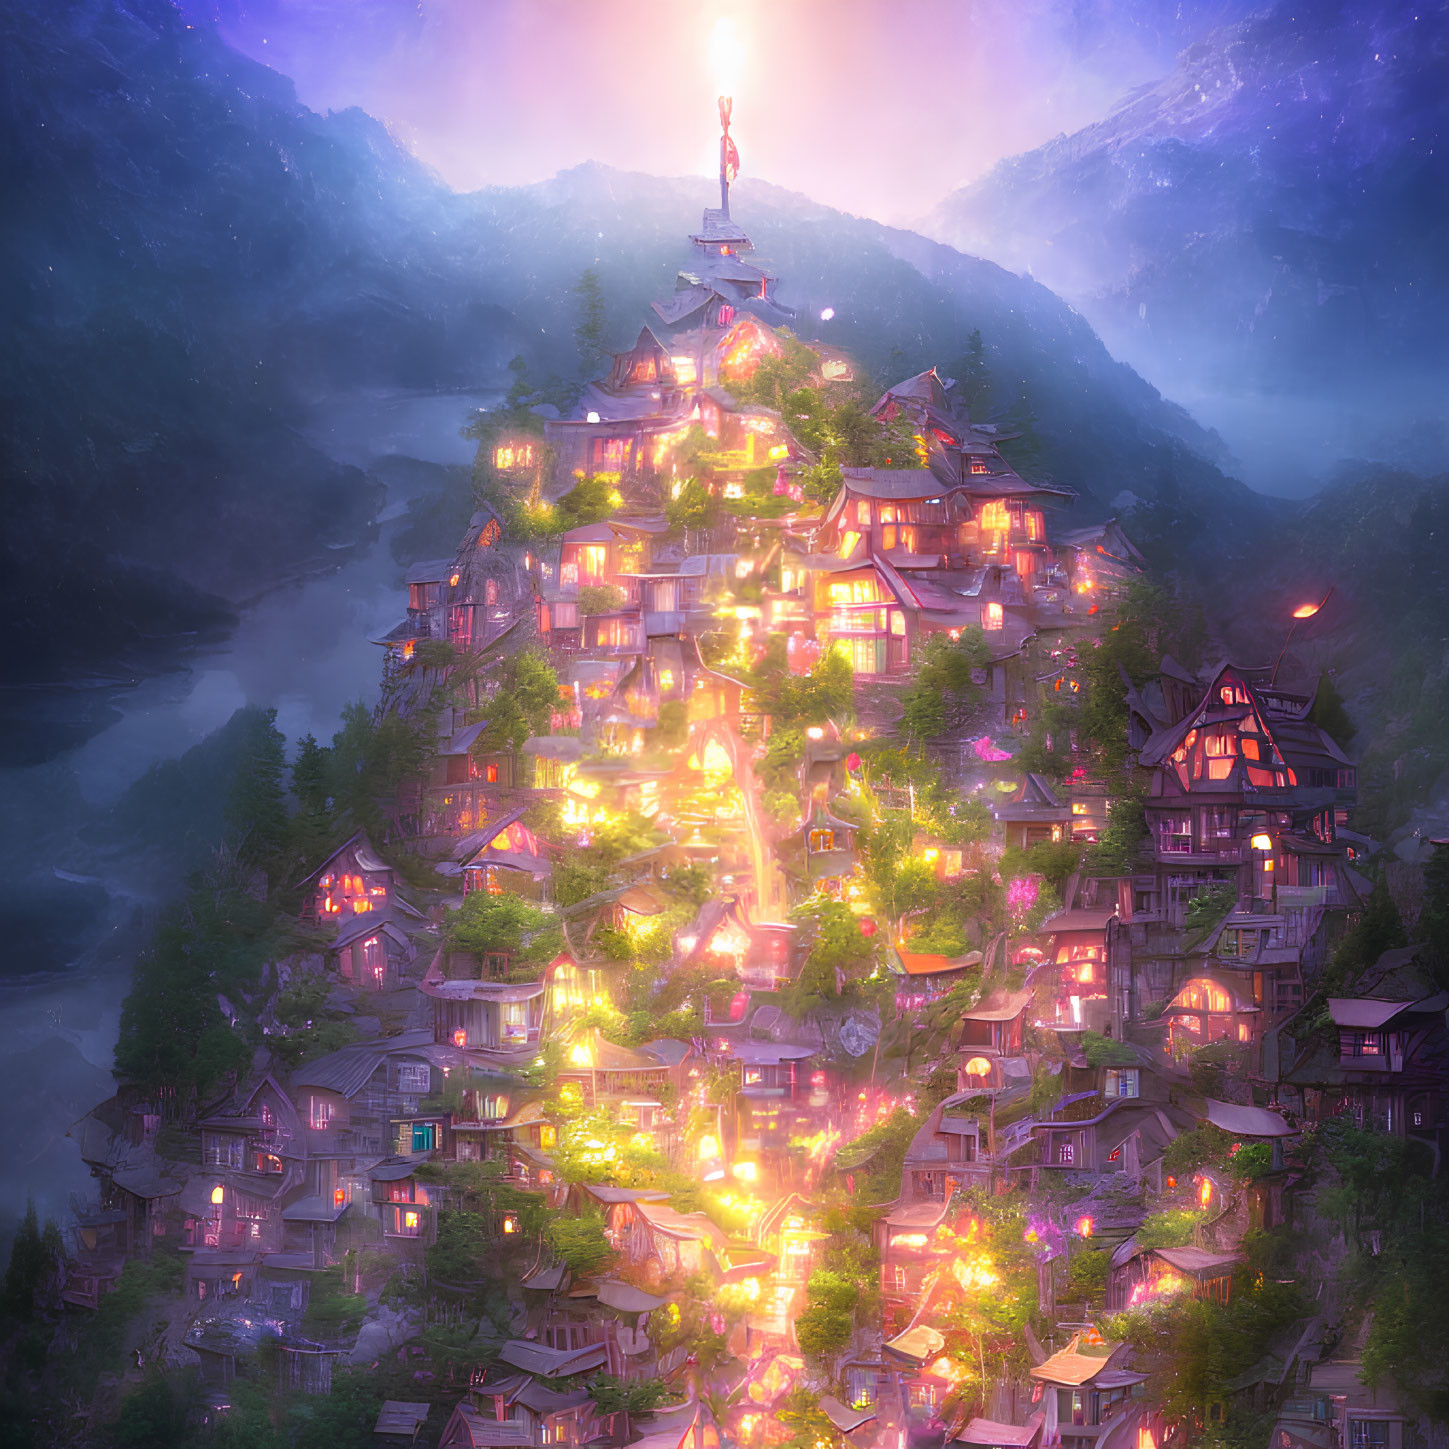 Illuminated mountainside village with glowing lights